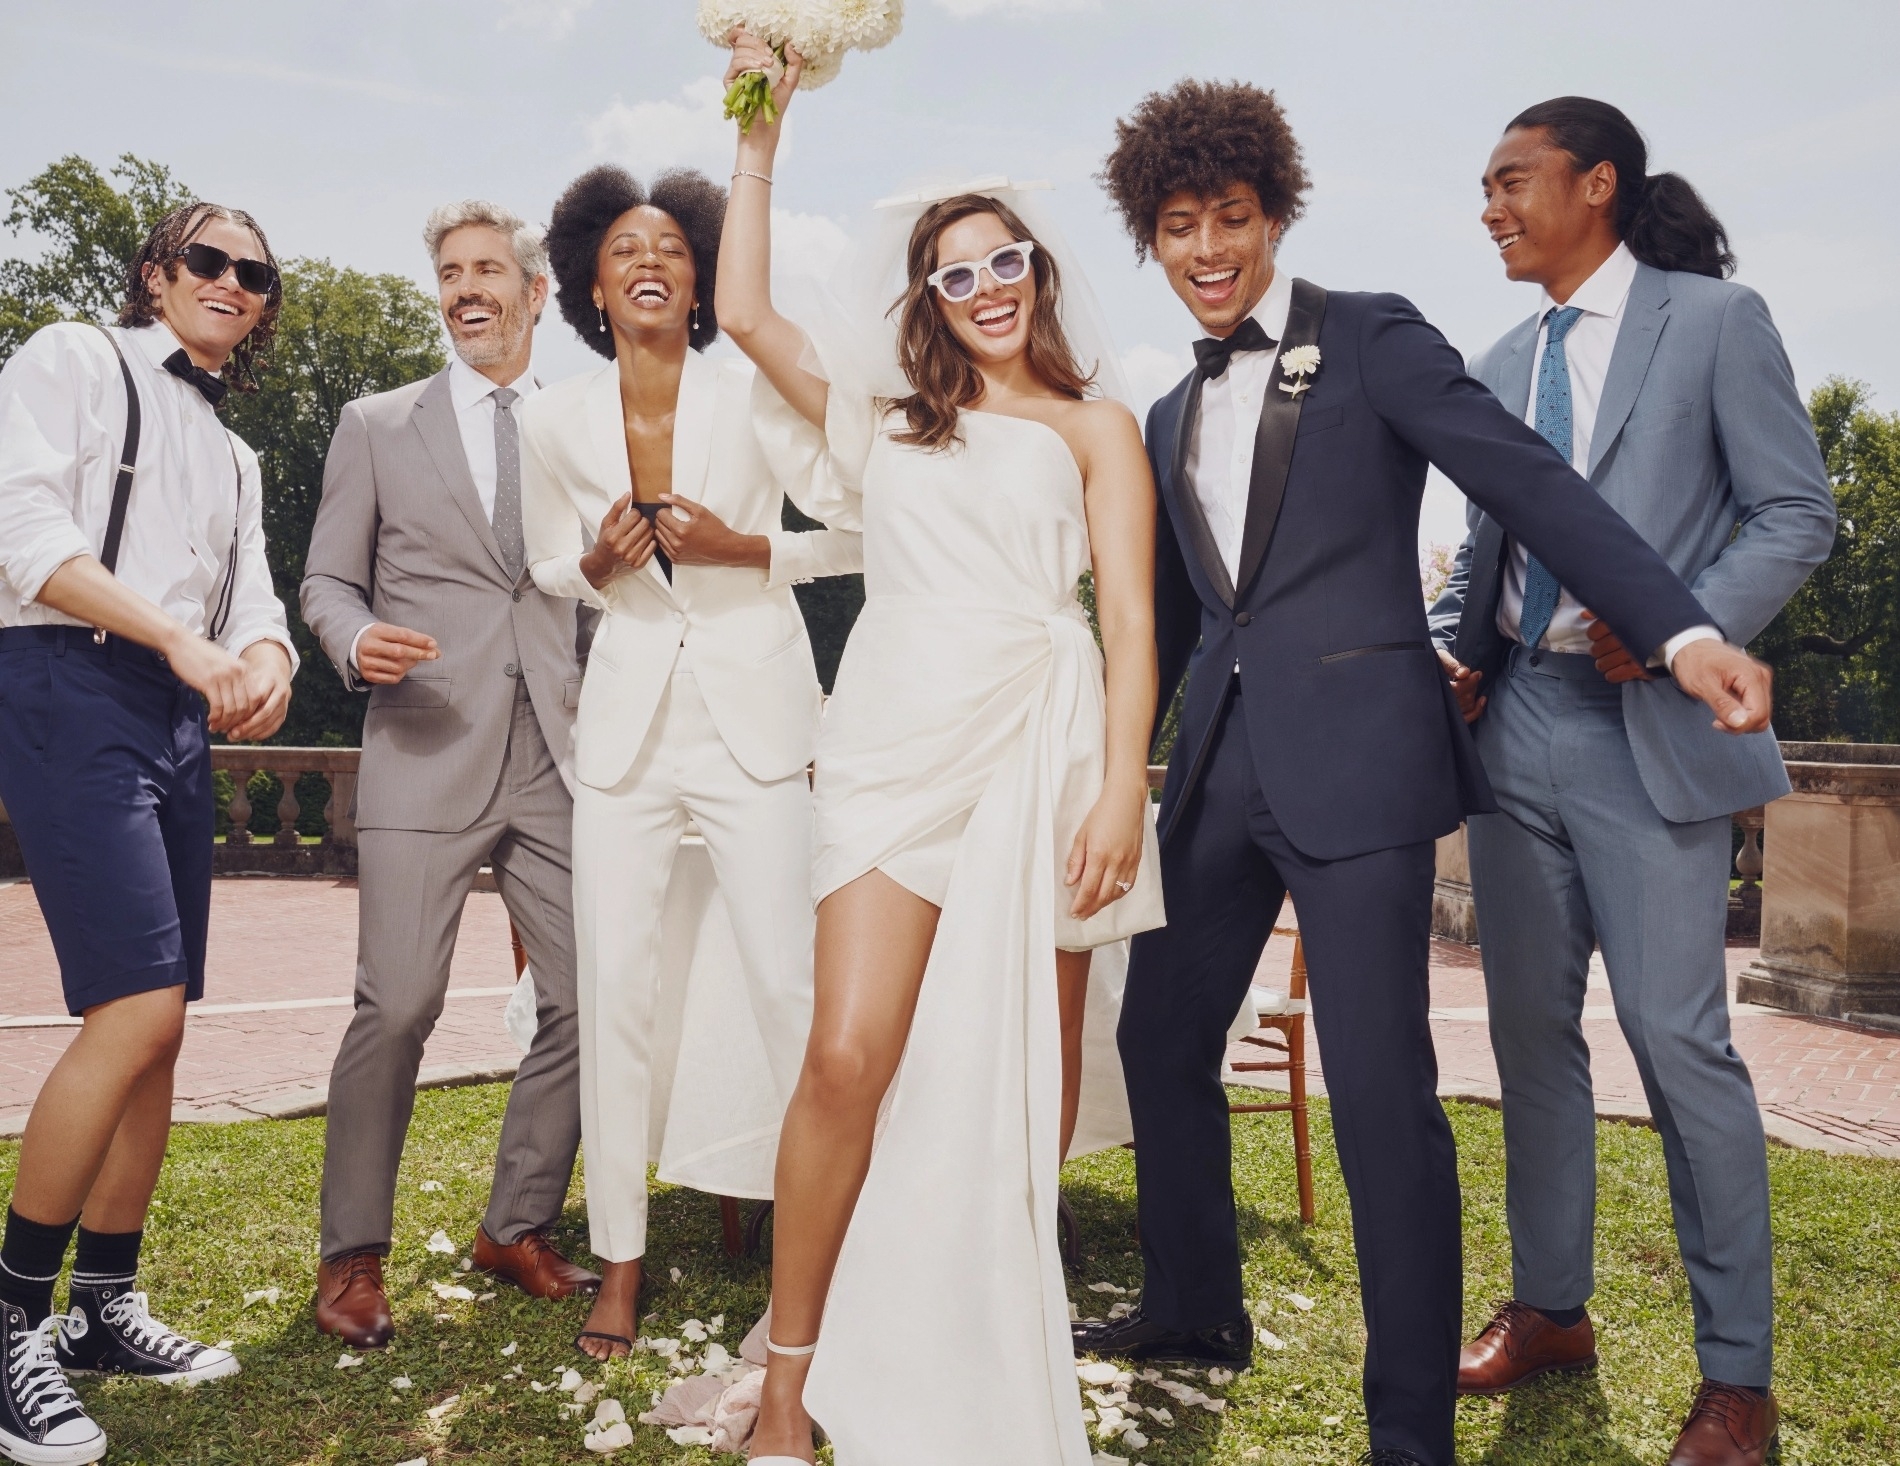 Mixed-gender wedding party celebrating in stylish wedding suits and tuxedos.